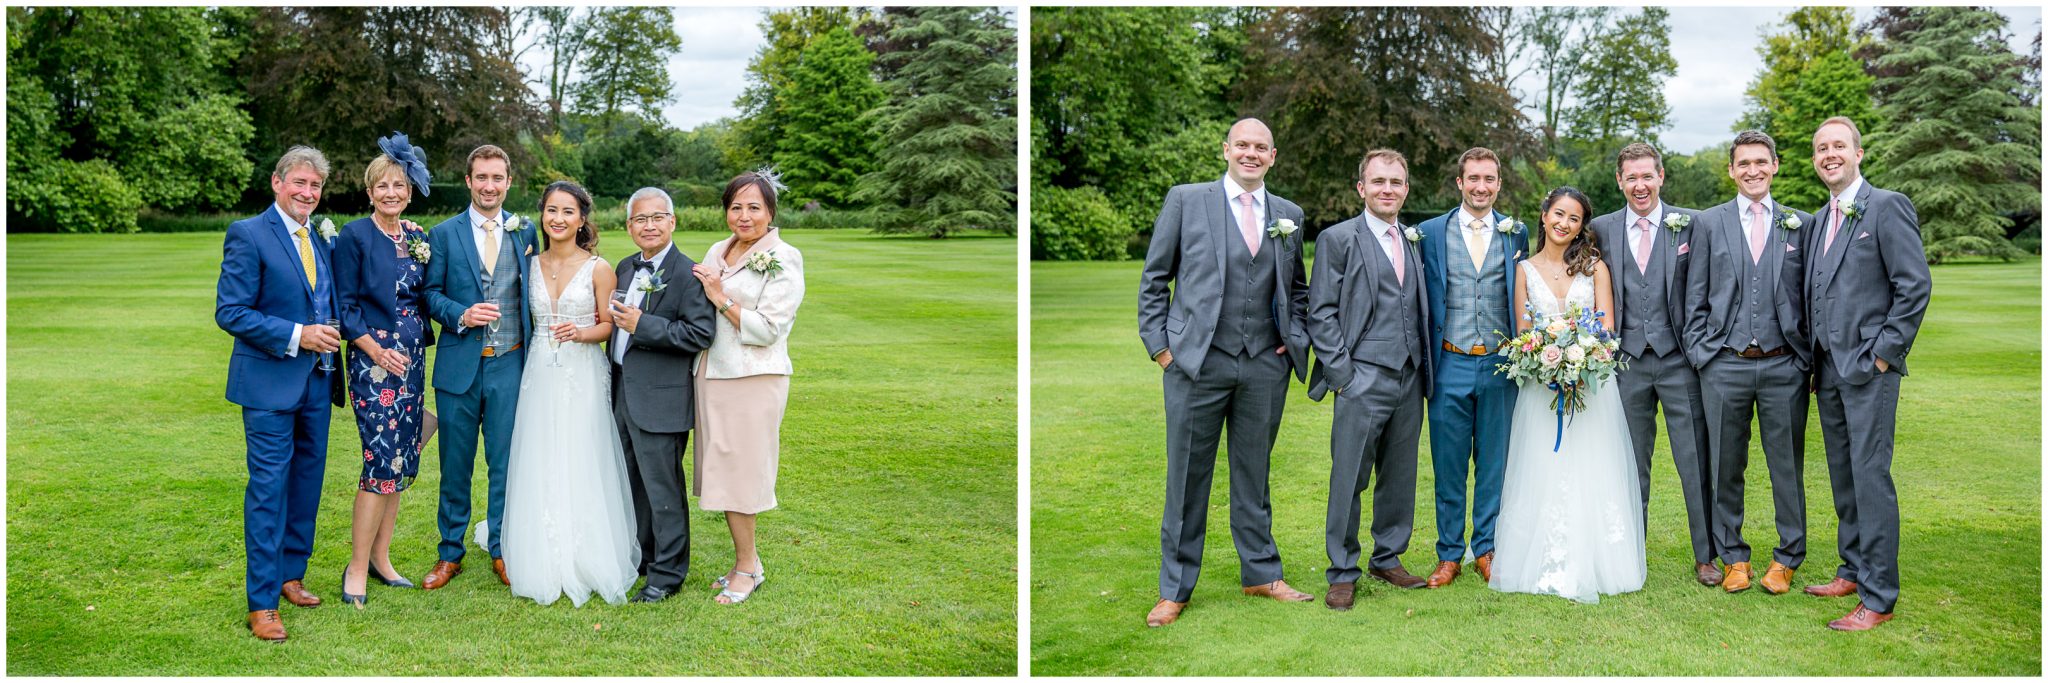 Family group photos in the grounds of Avington Park wedding venue